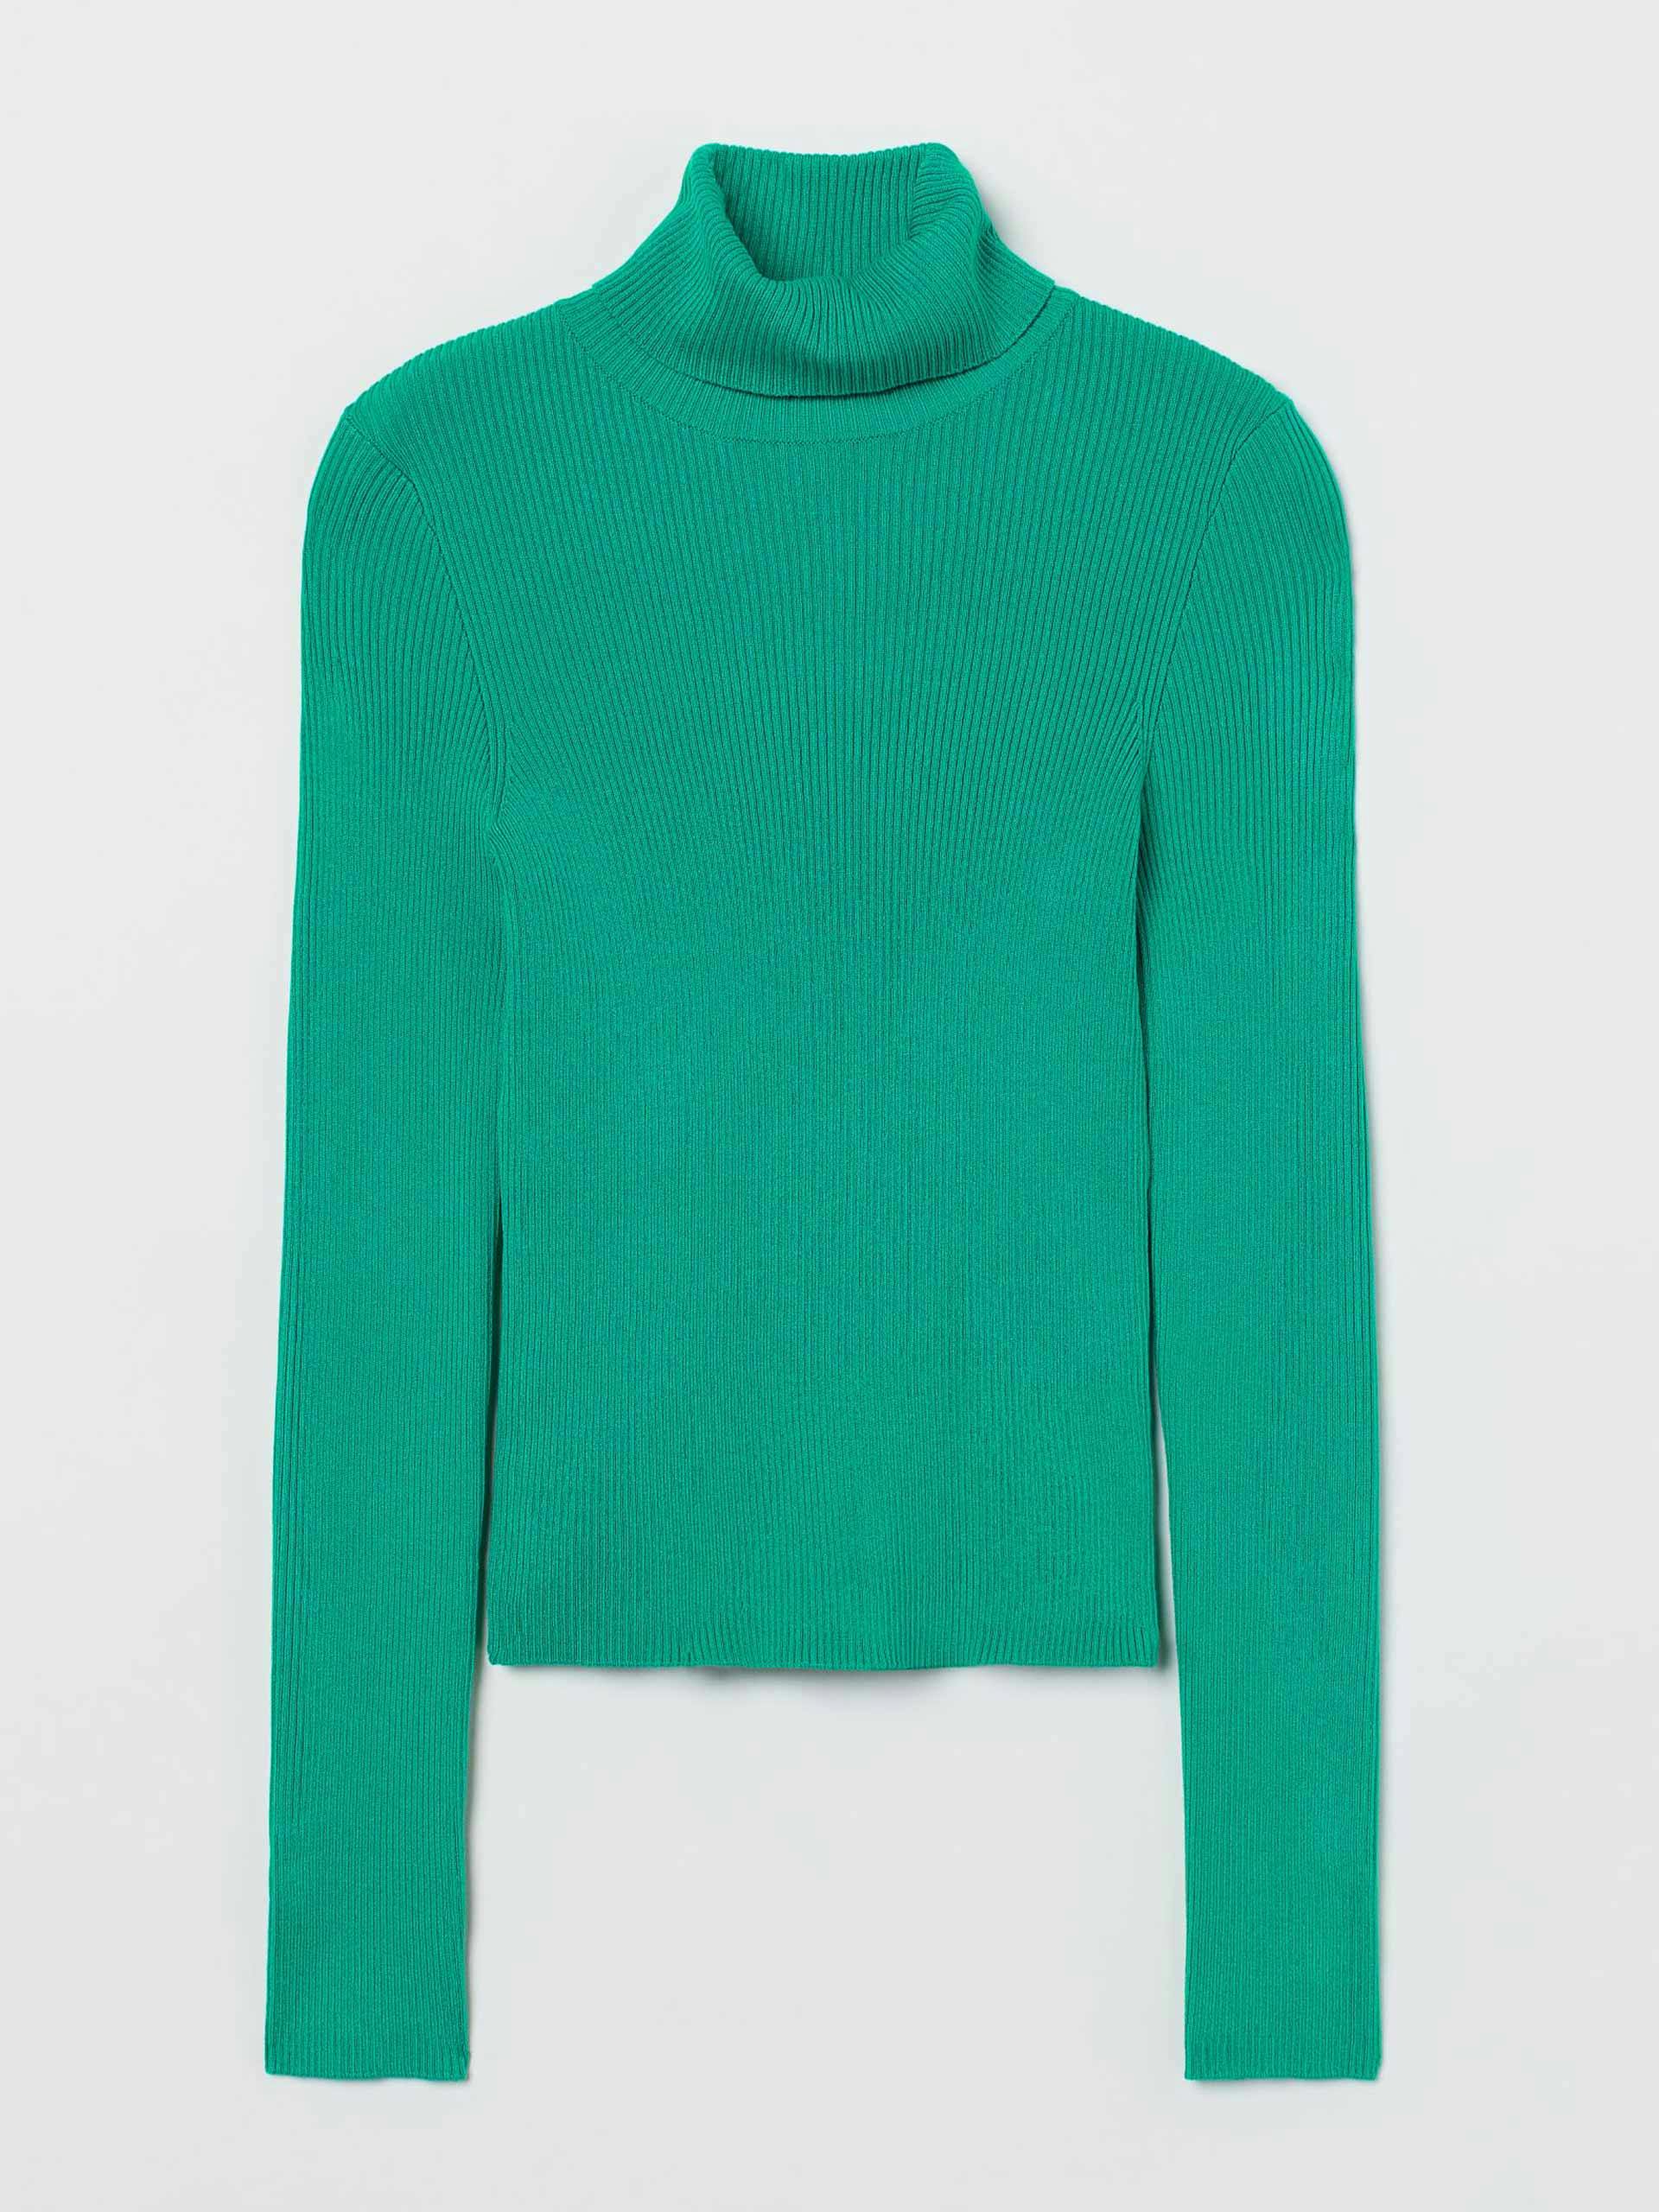 Rib-knit polo neck green jumper